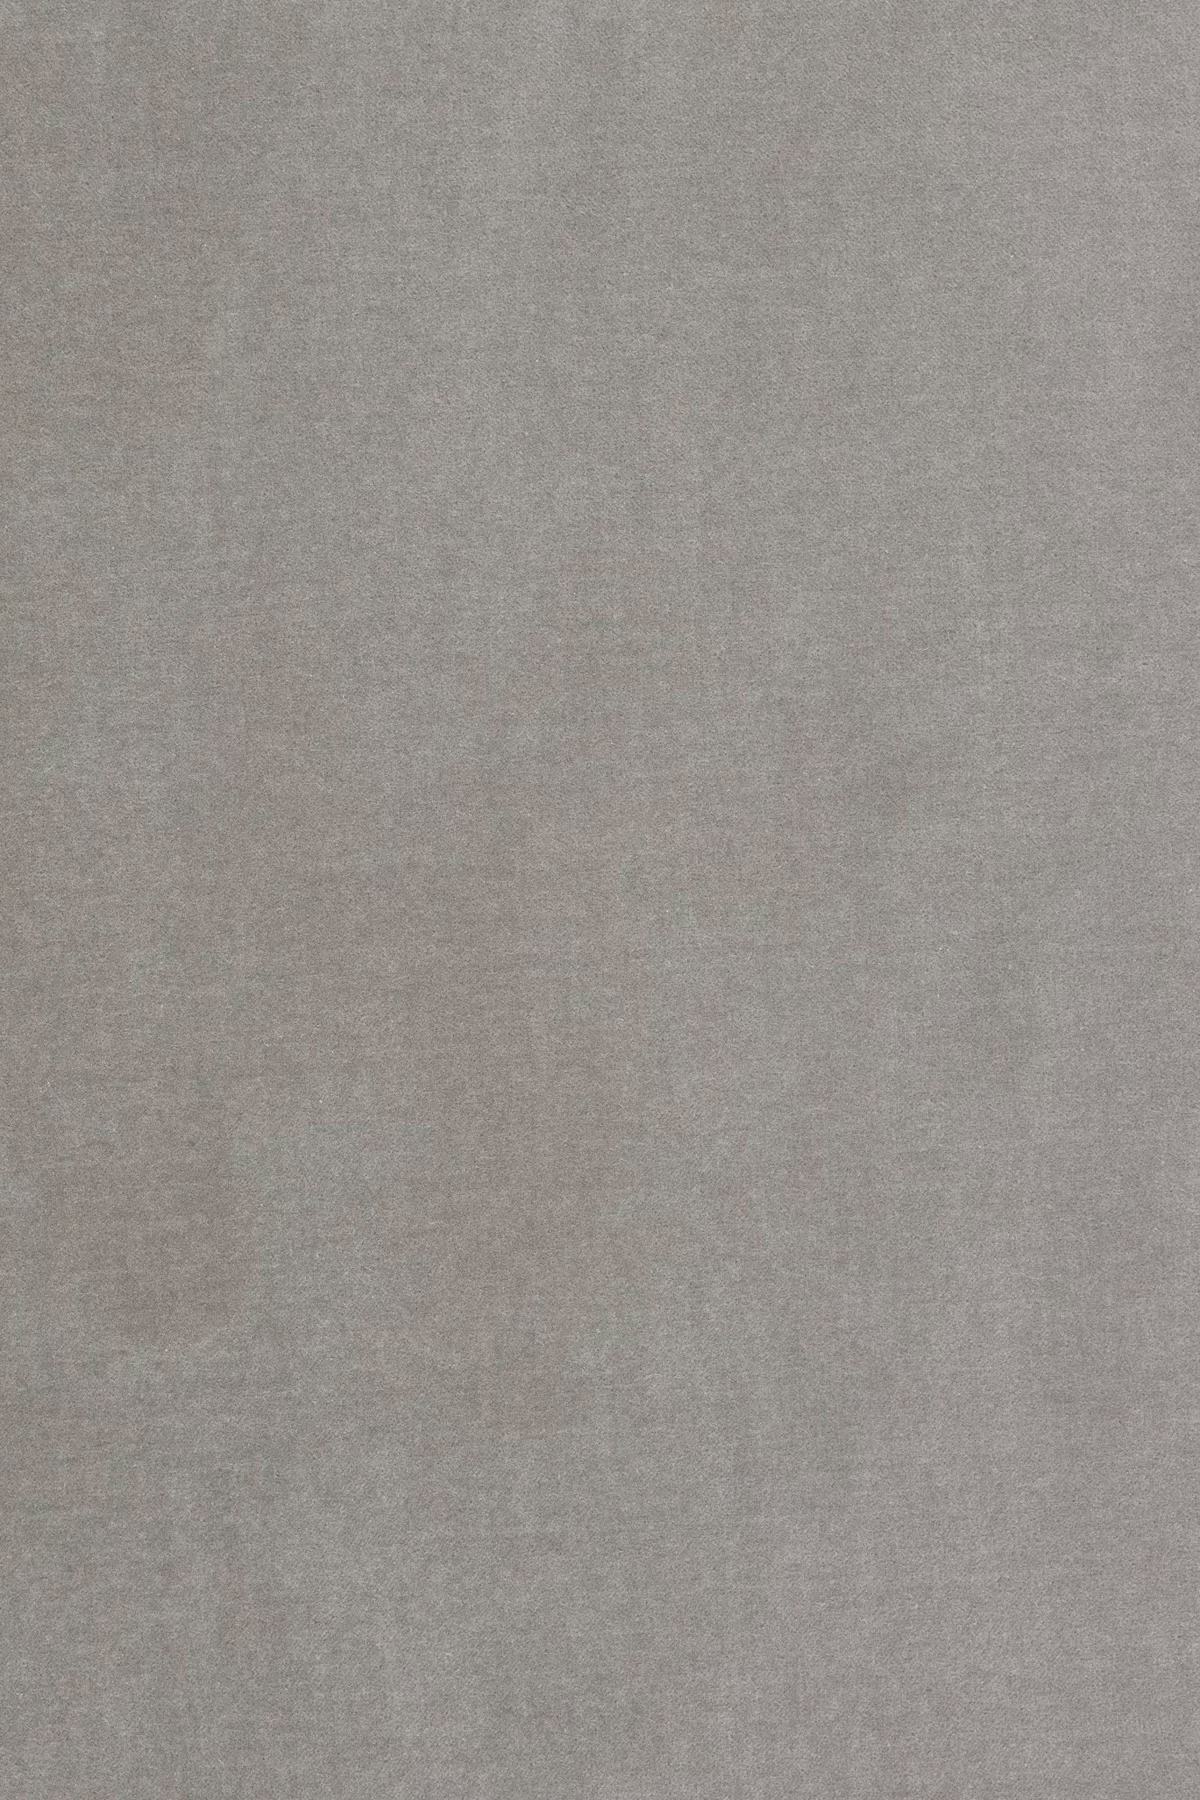 Fabric sample Harald 3, 143 grey